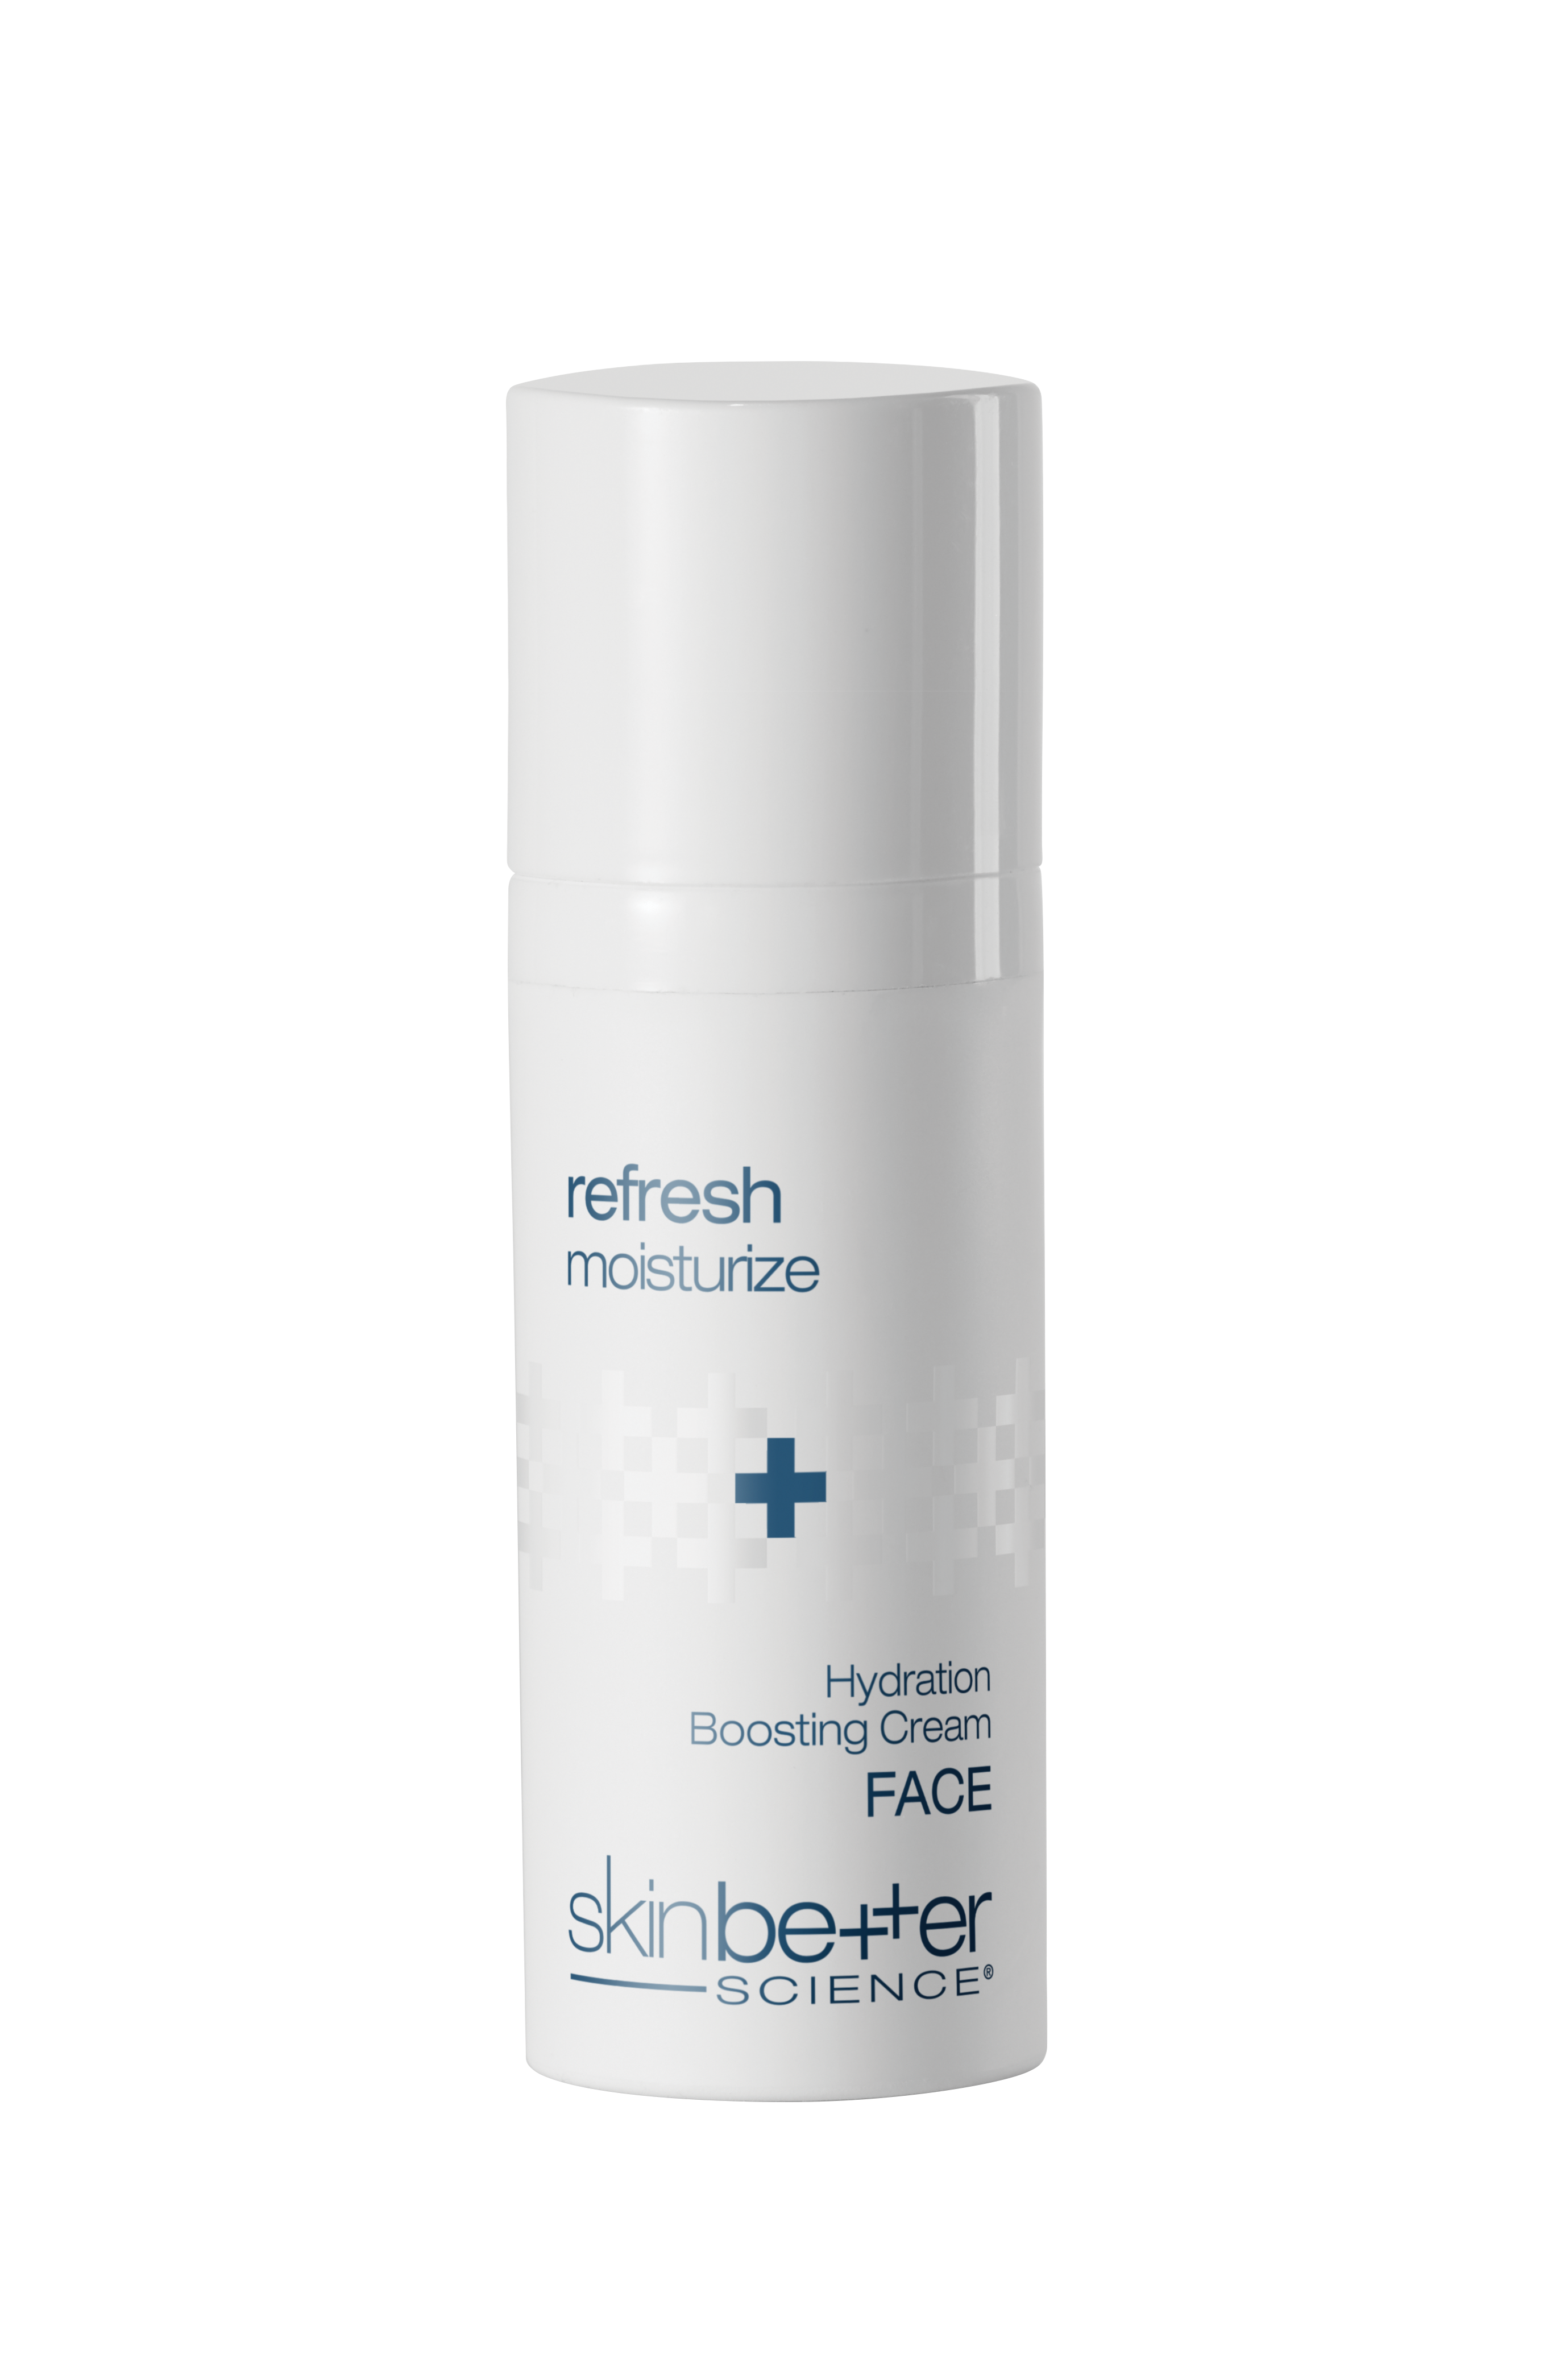 Skinbetter Science | Clarity Regimen (AlphaRet Clearing Serum, Hydration Boosting Cream and AlphaRet Exfoliating Peel Pads)